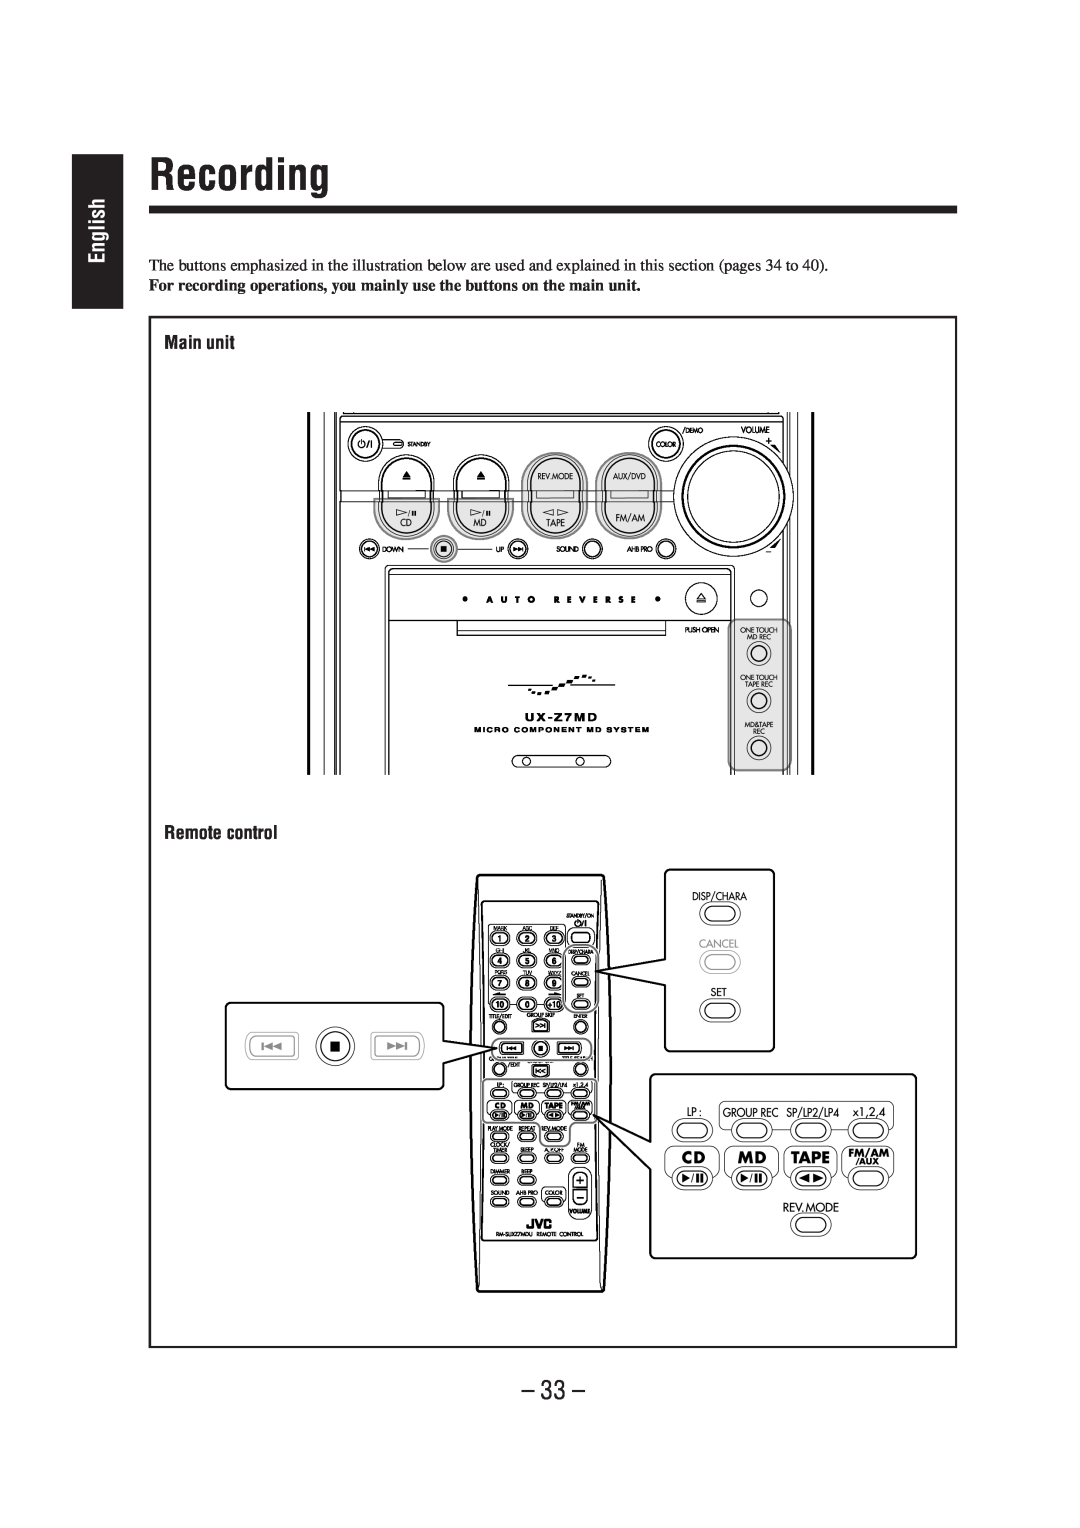 JVC LVT0900-004A, CA-UXZ7MD manual Recording, English, Main unit, Remote control 